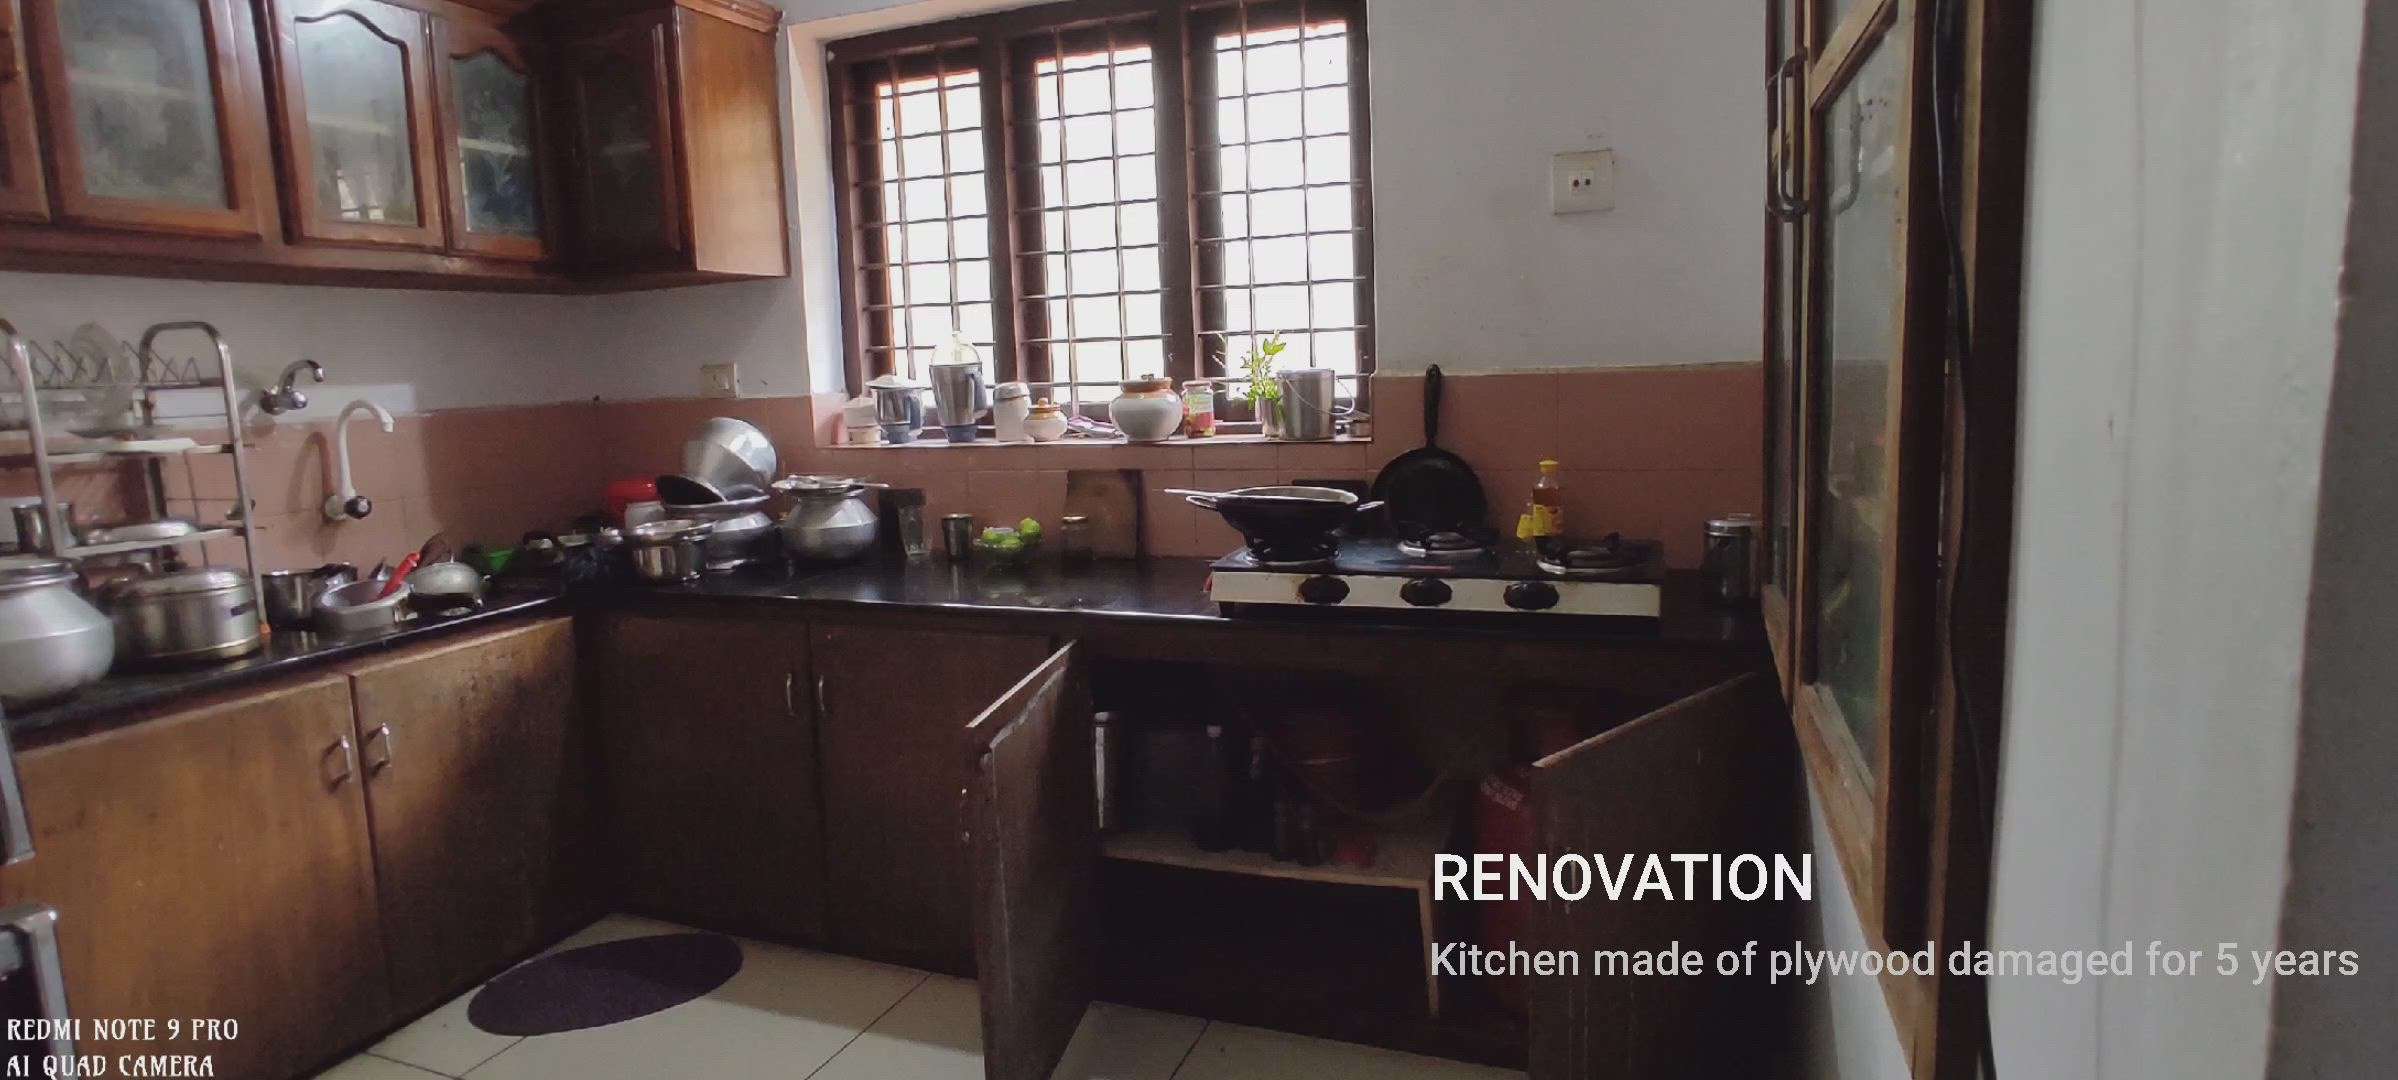 Godrej modular Kitchens - Trissur
Renovation Work
Contact : 9995332700